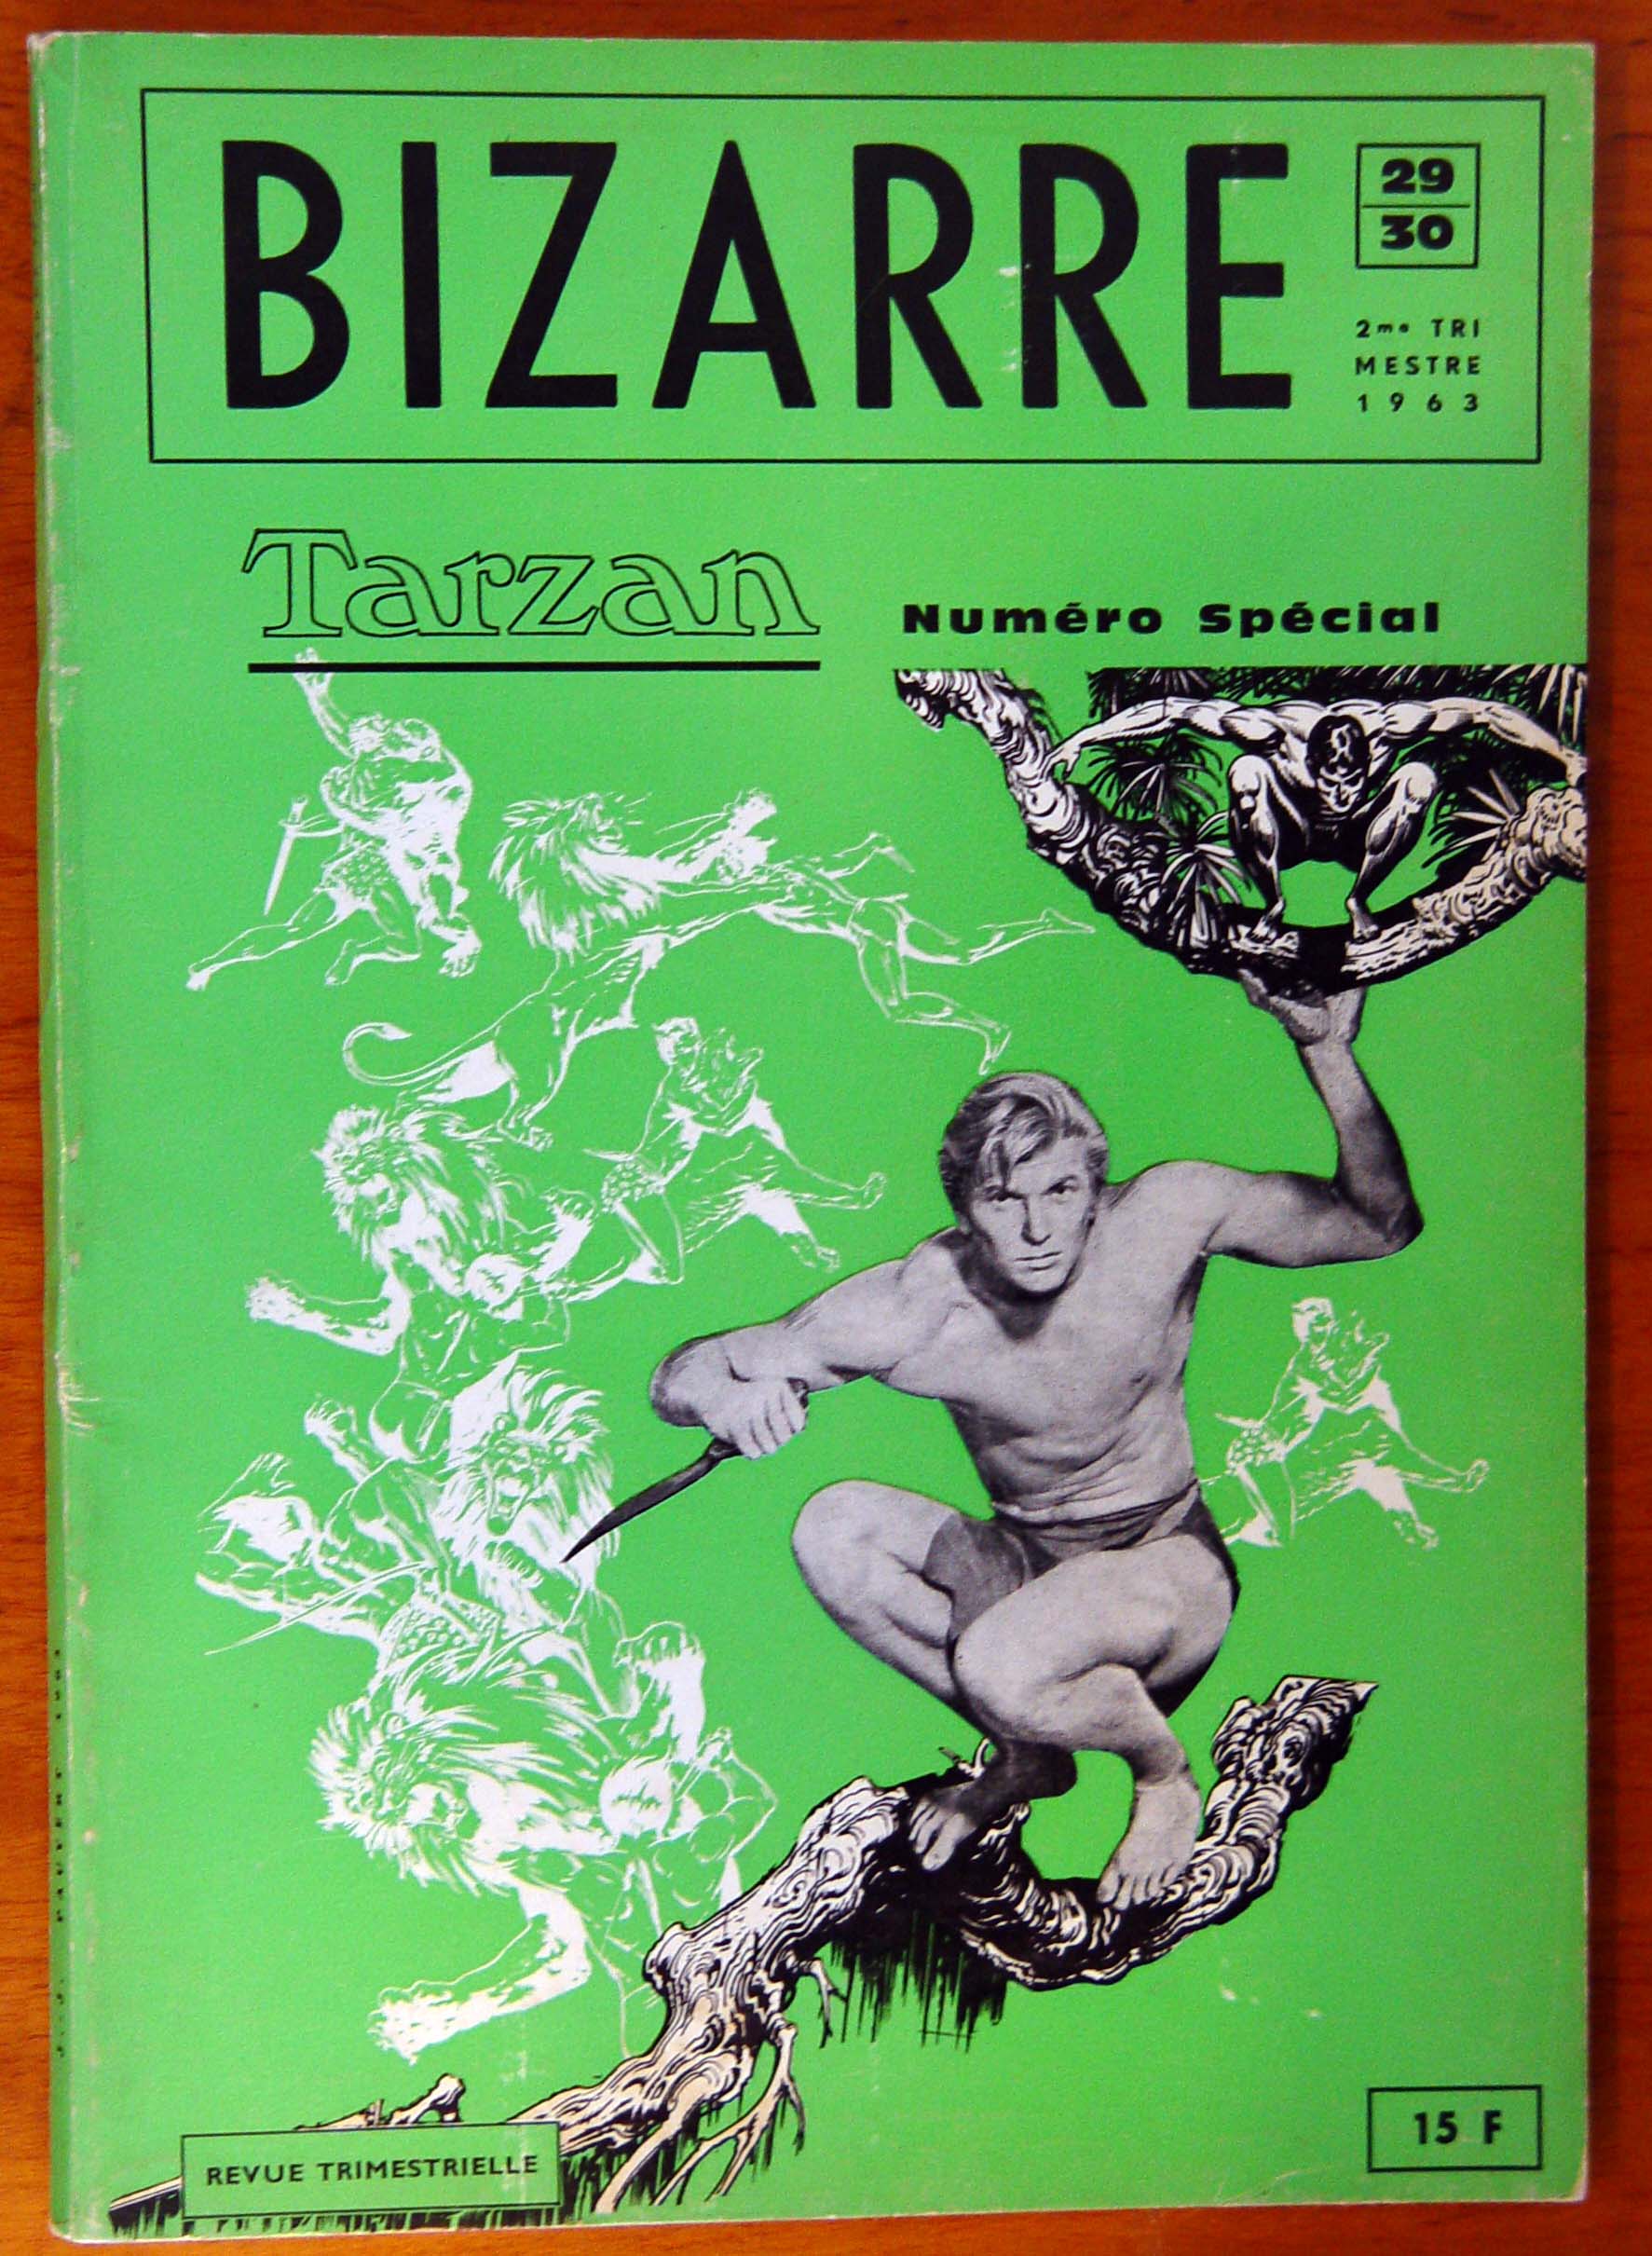 Special Tarzan Issue, Bizarre, no. 11/12 (1962)